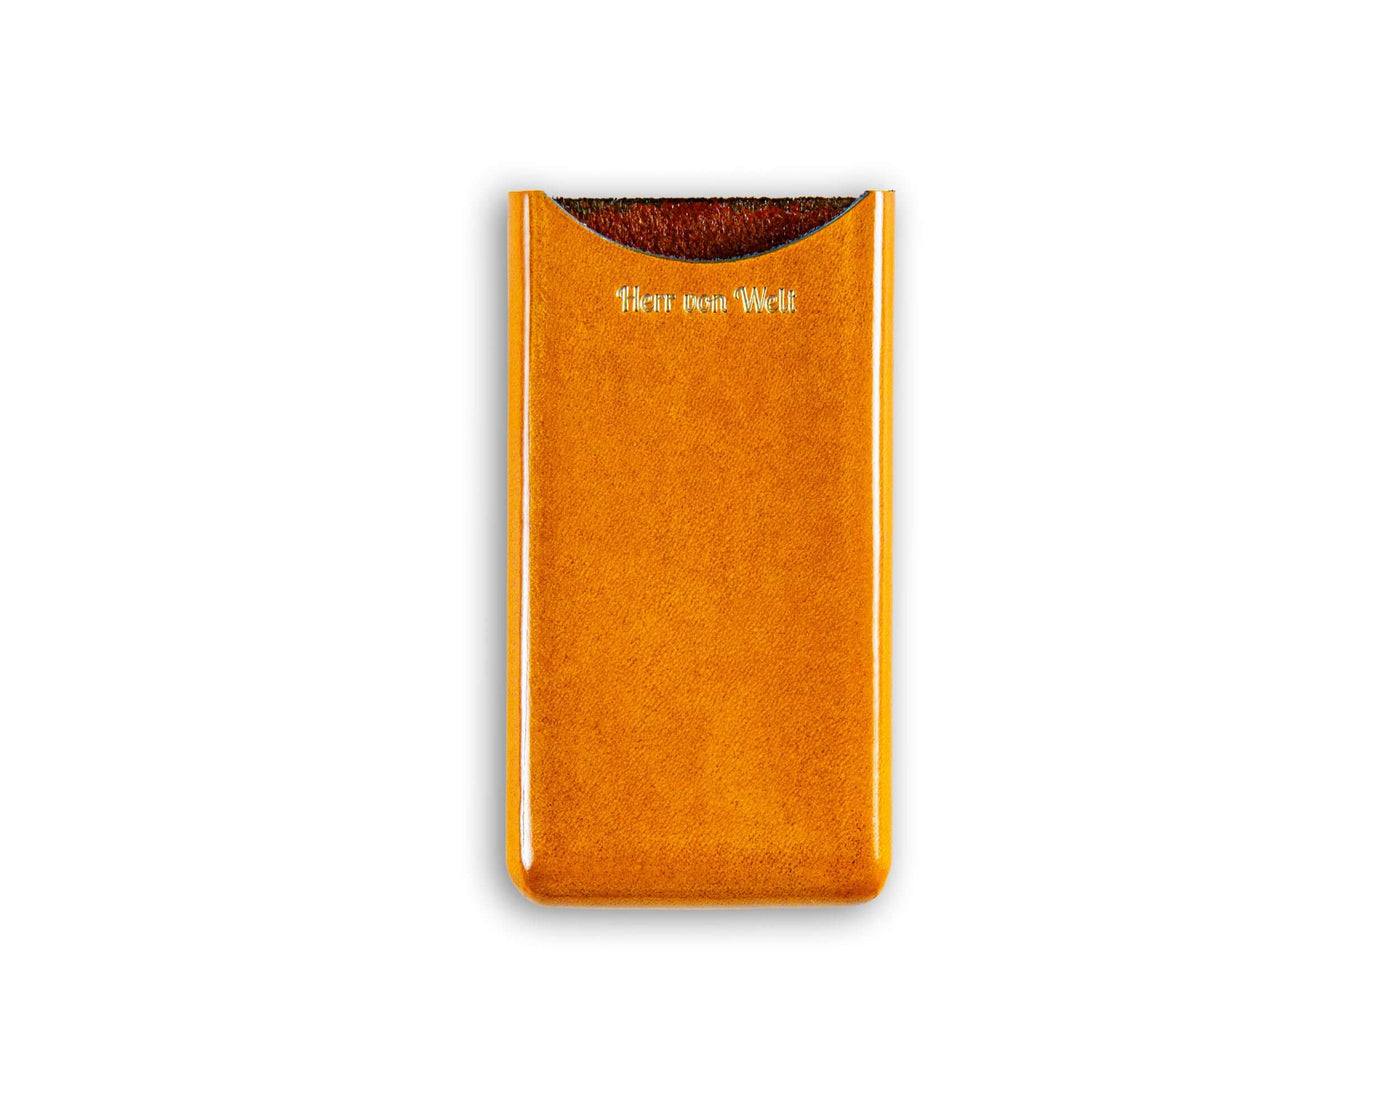 Cigarette case Yellow 6er